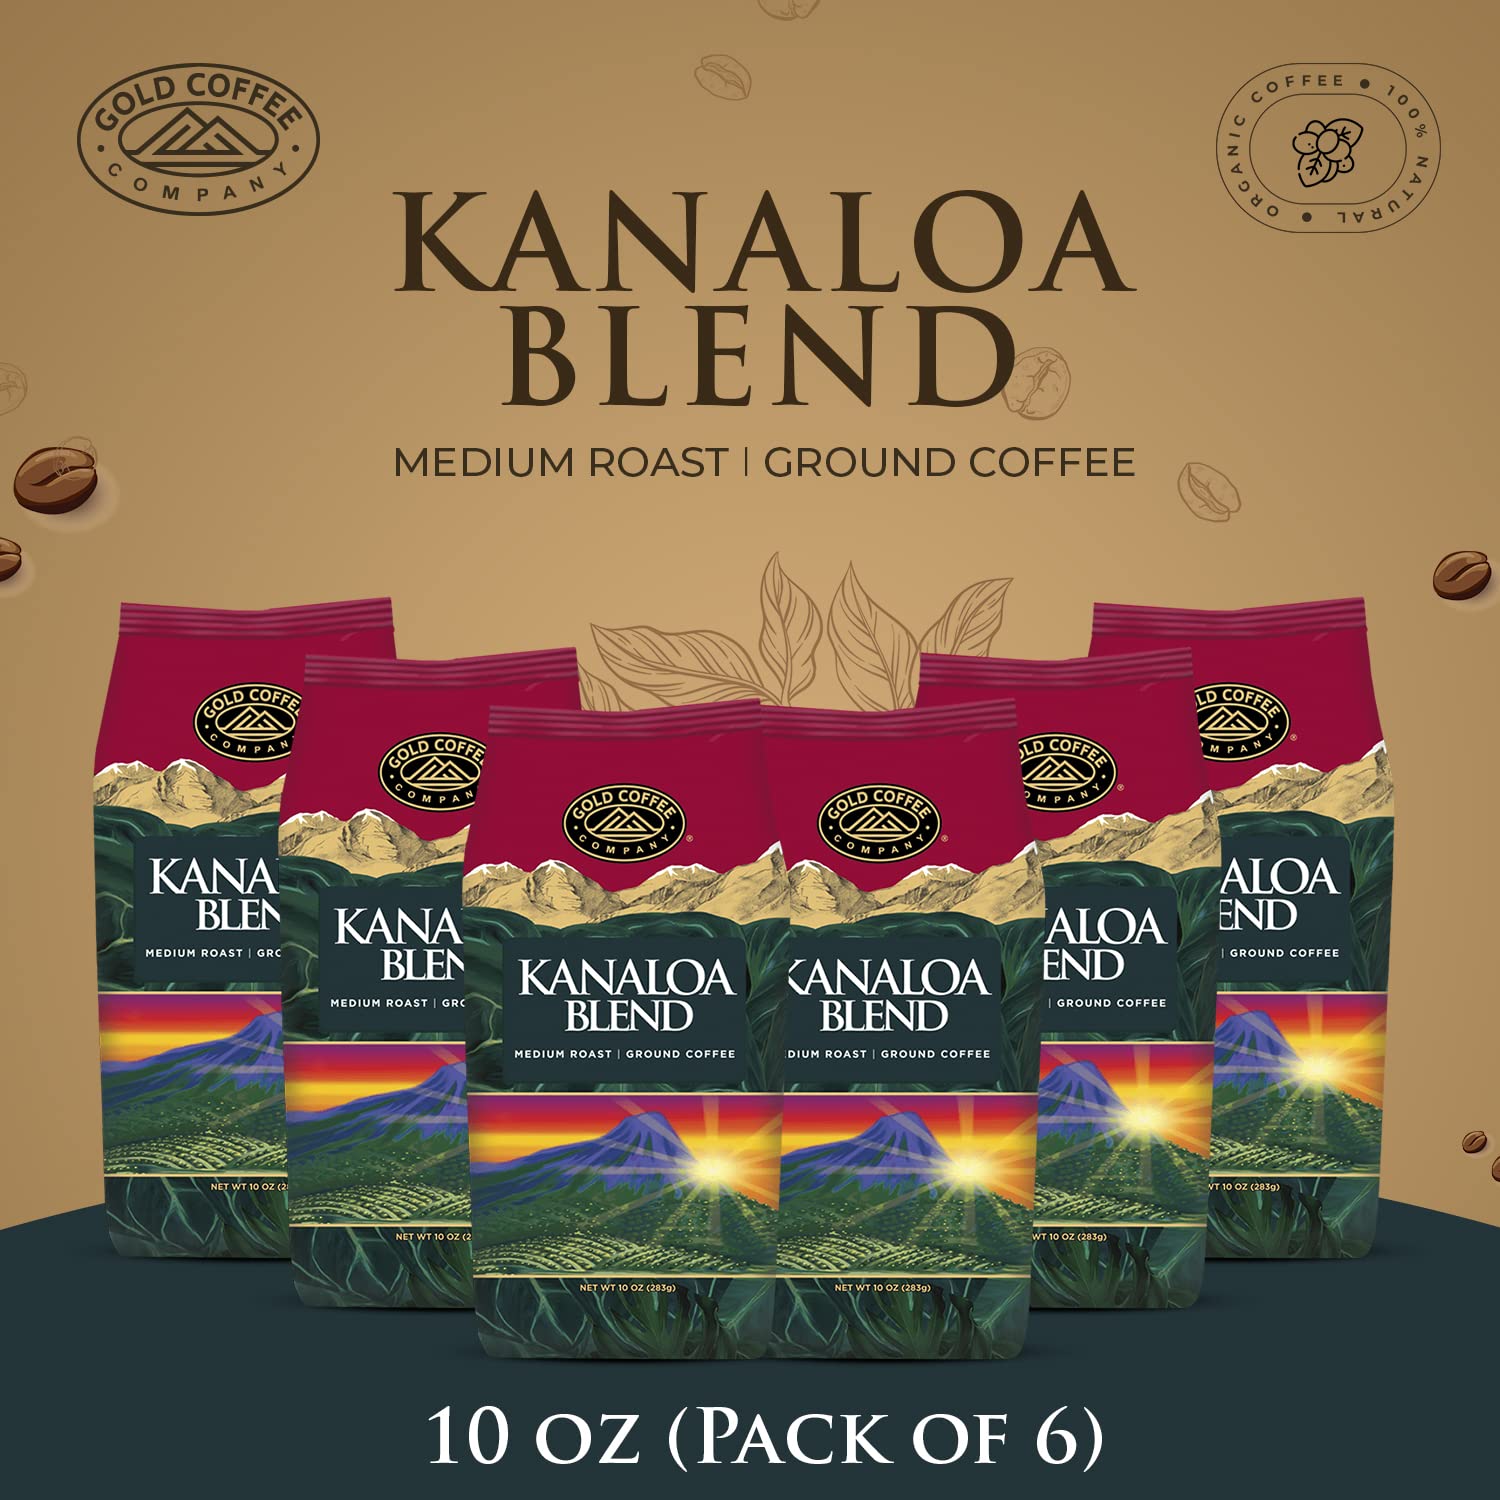 Gold Coffee Kanaloa Blend 1lb Medium Roast Whole Bean Coffee